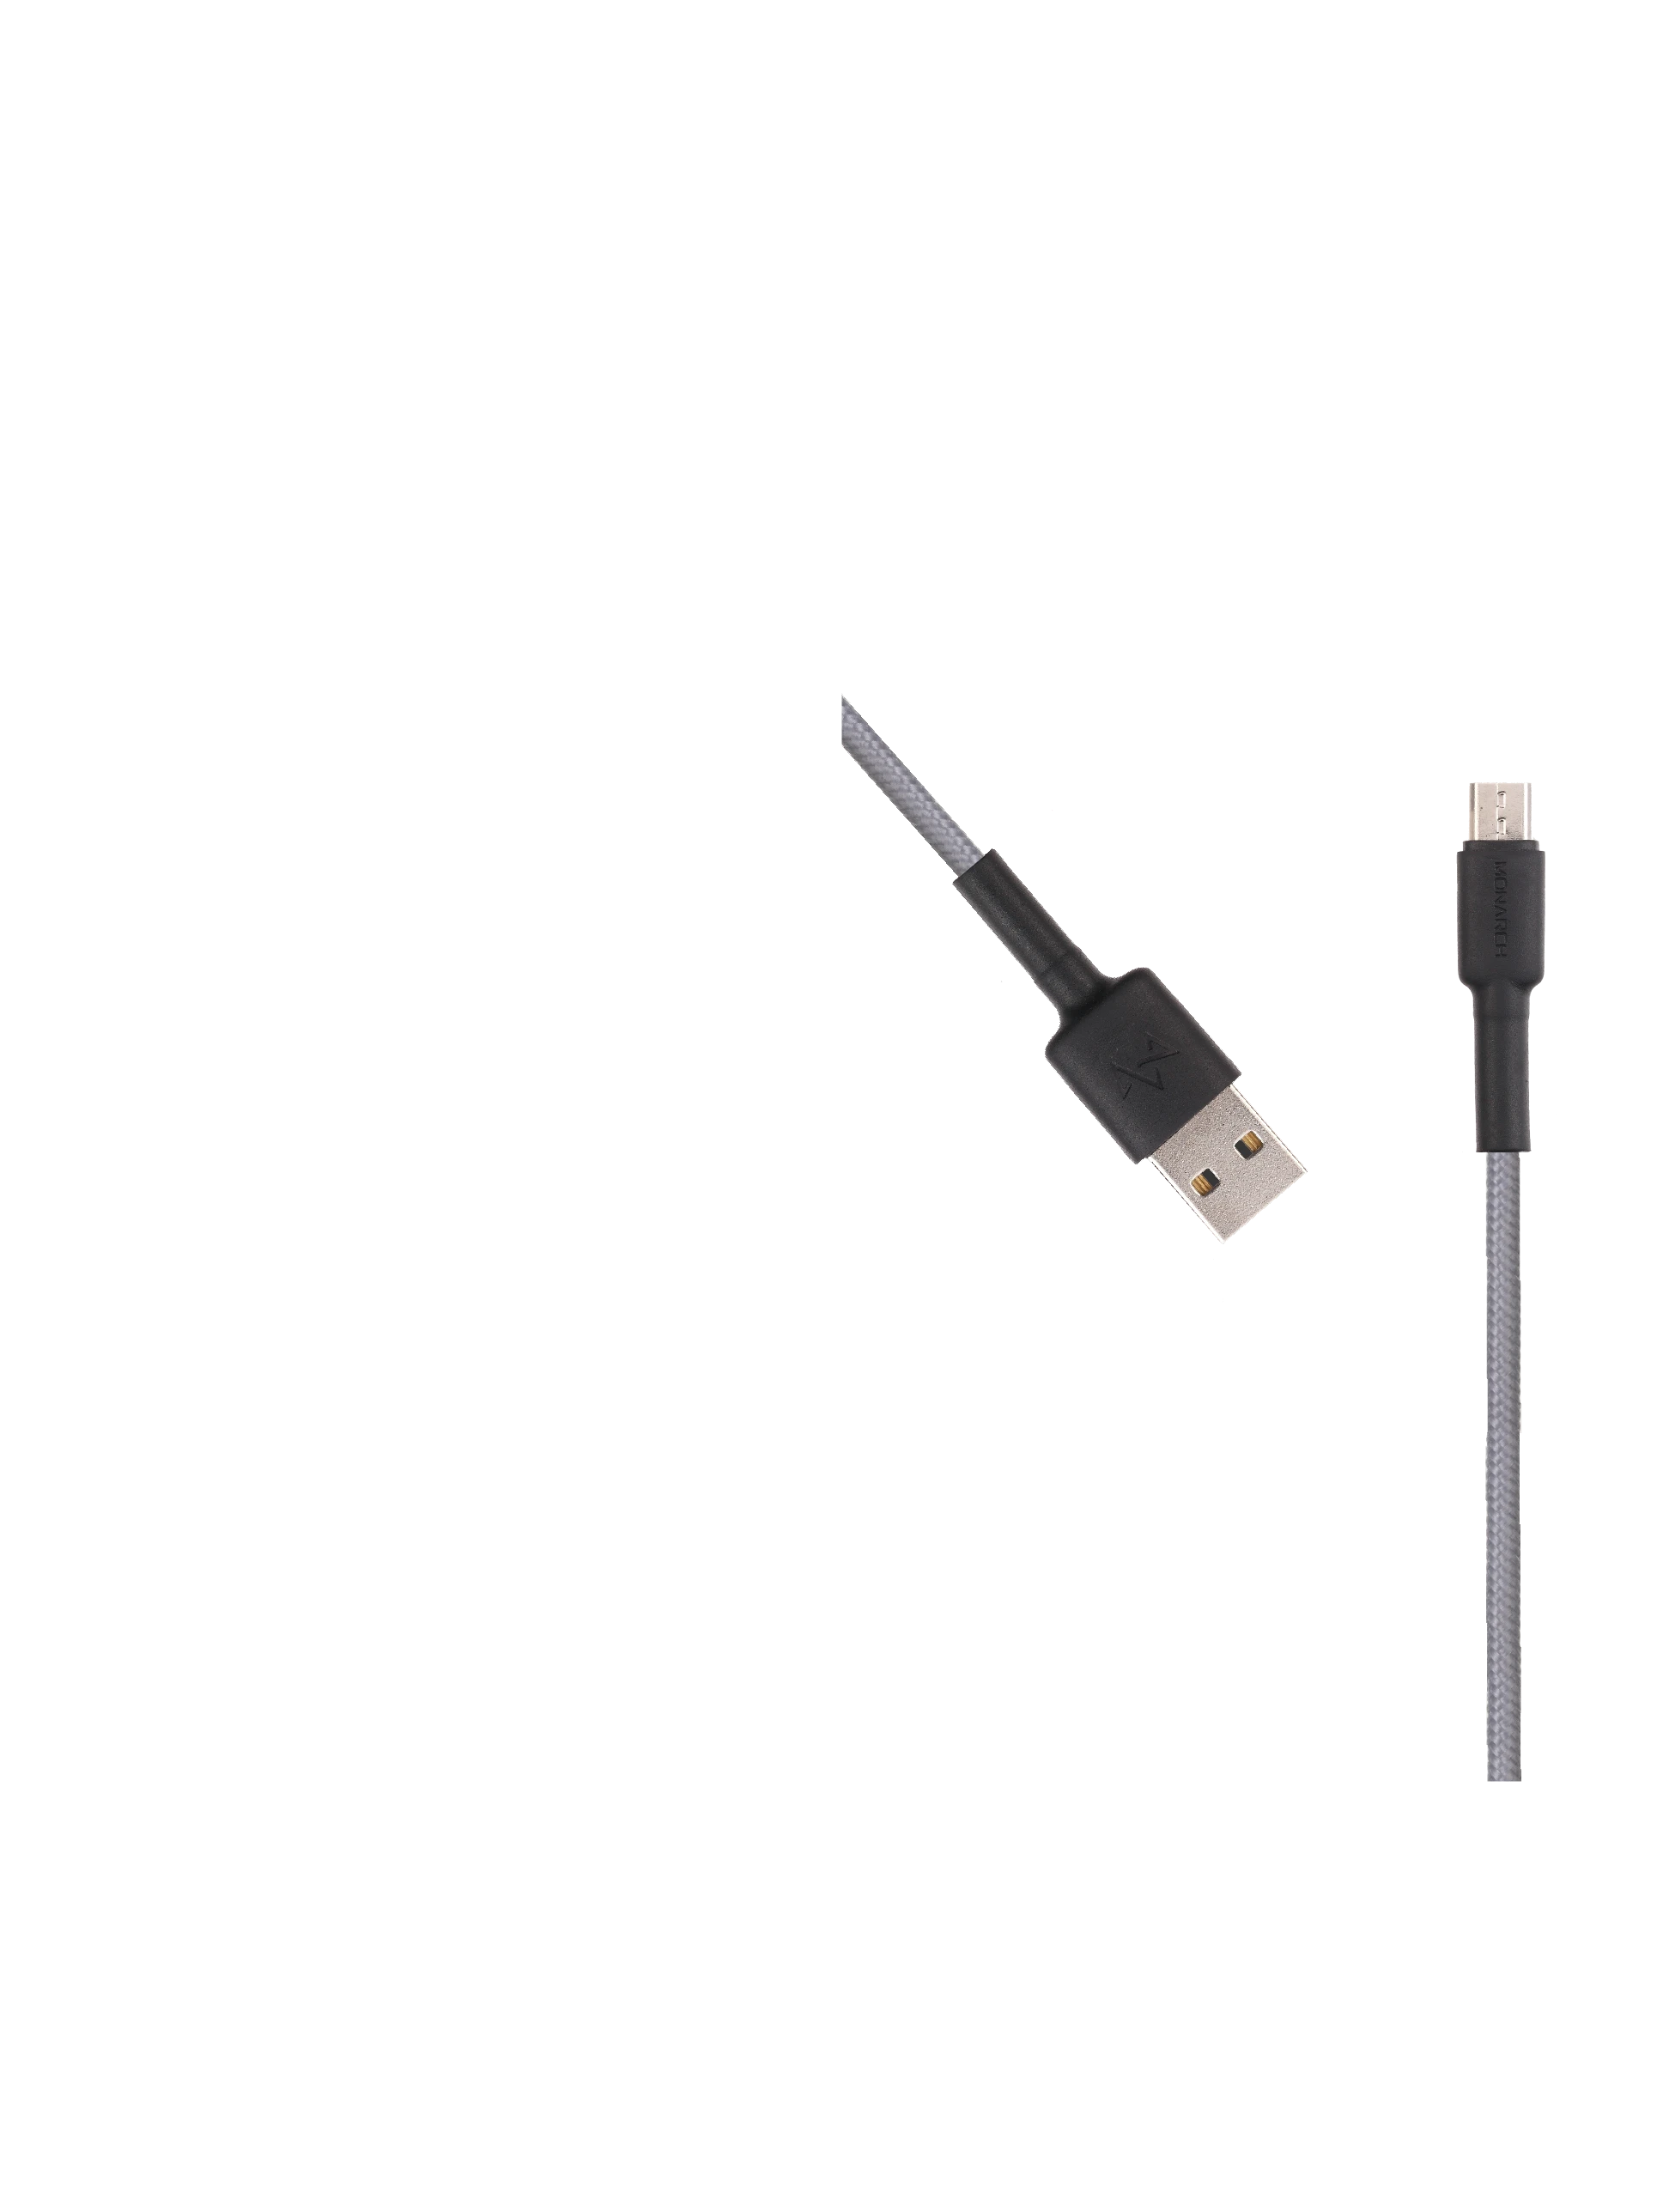 Monarch Micro USB Cable Q Series Braided 1.2m GREY